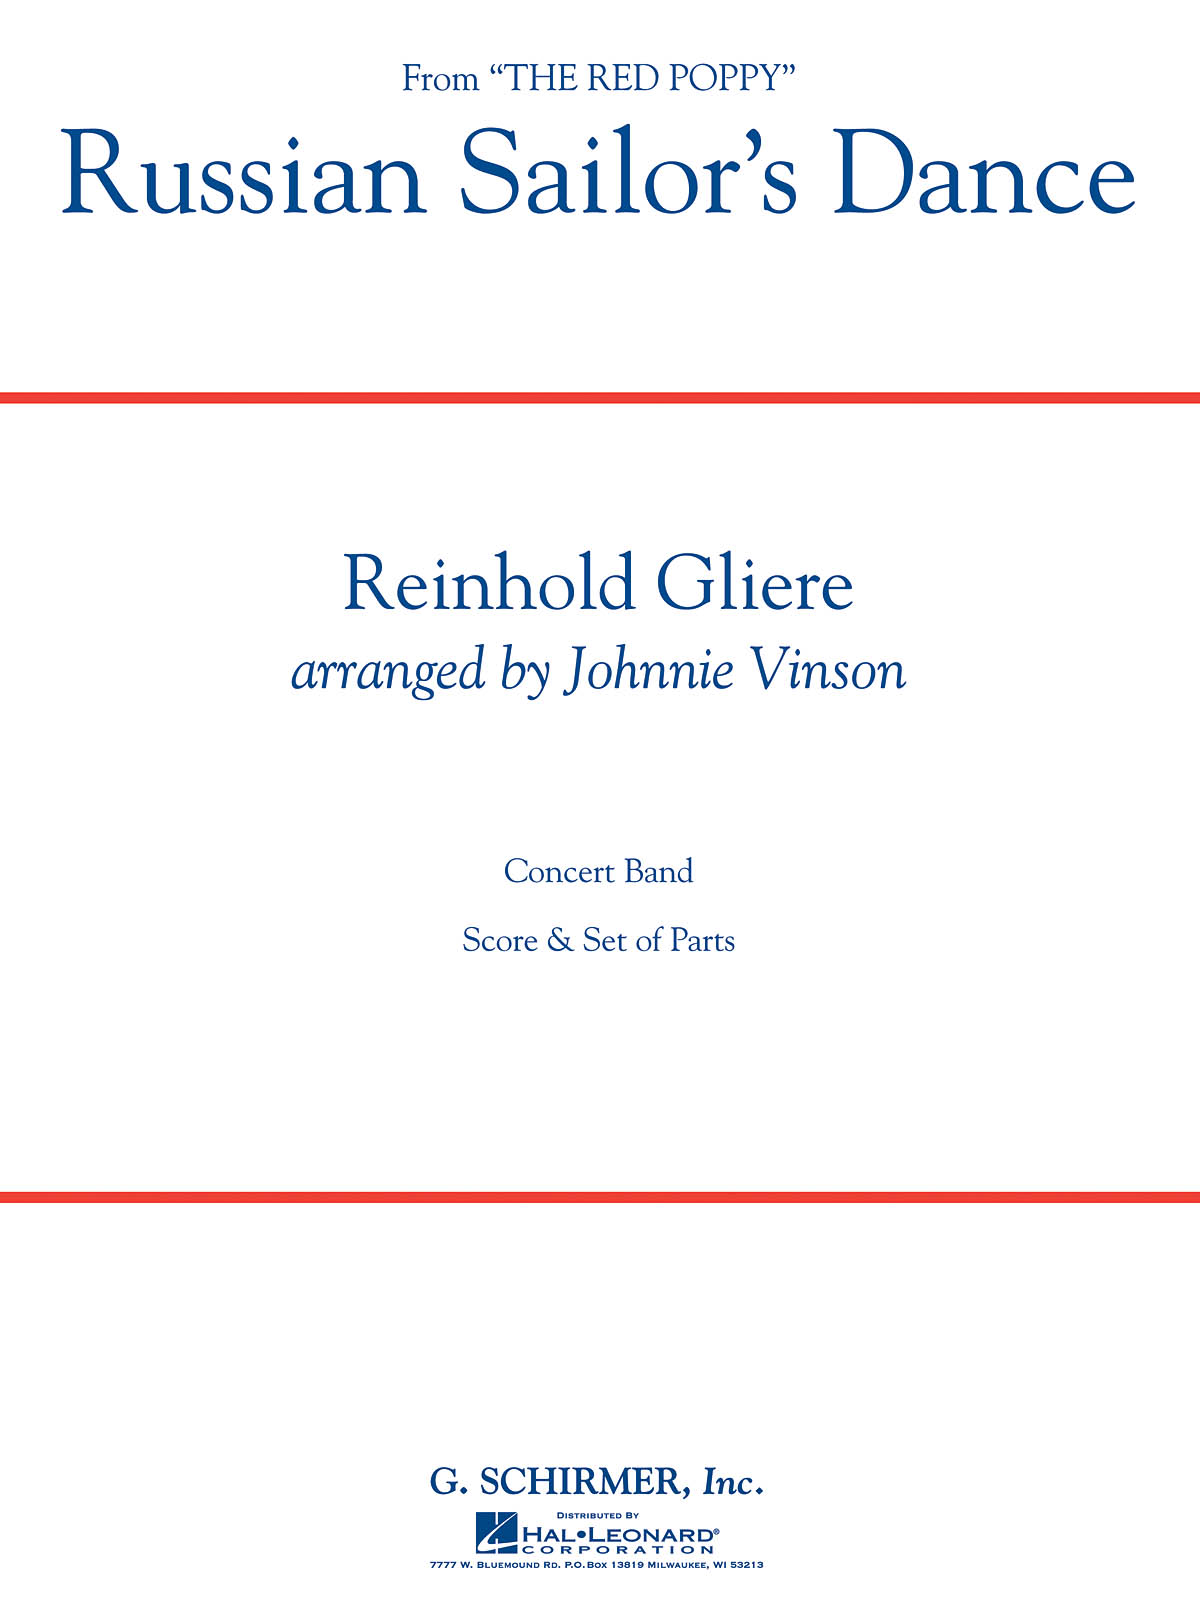 Reinhold Gliere: Russian Sailor’s Dance